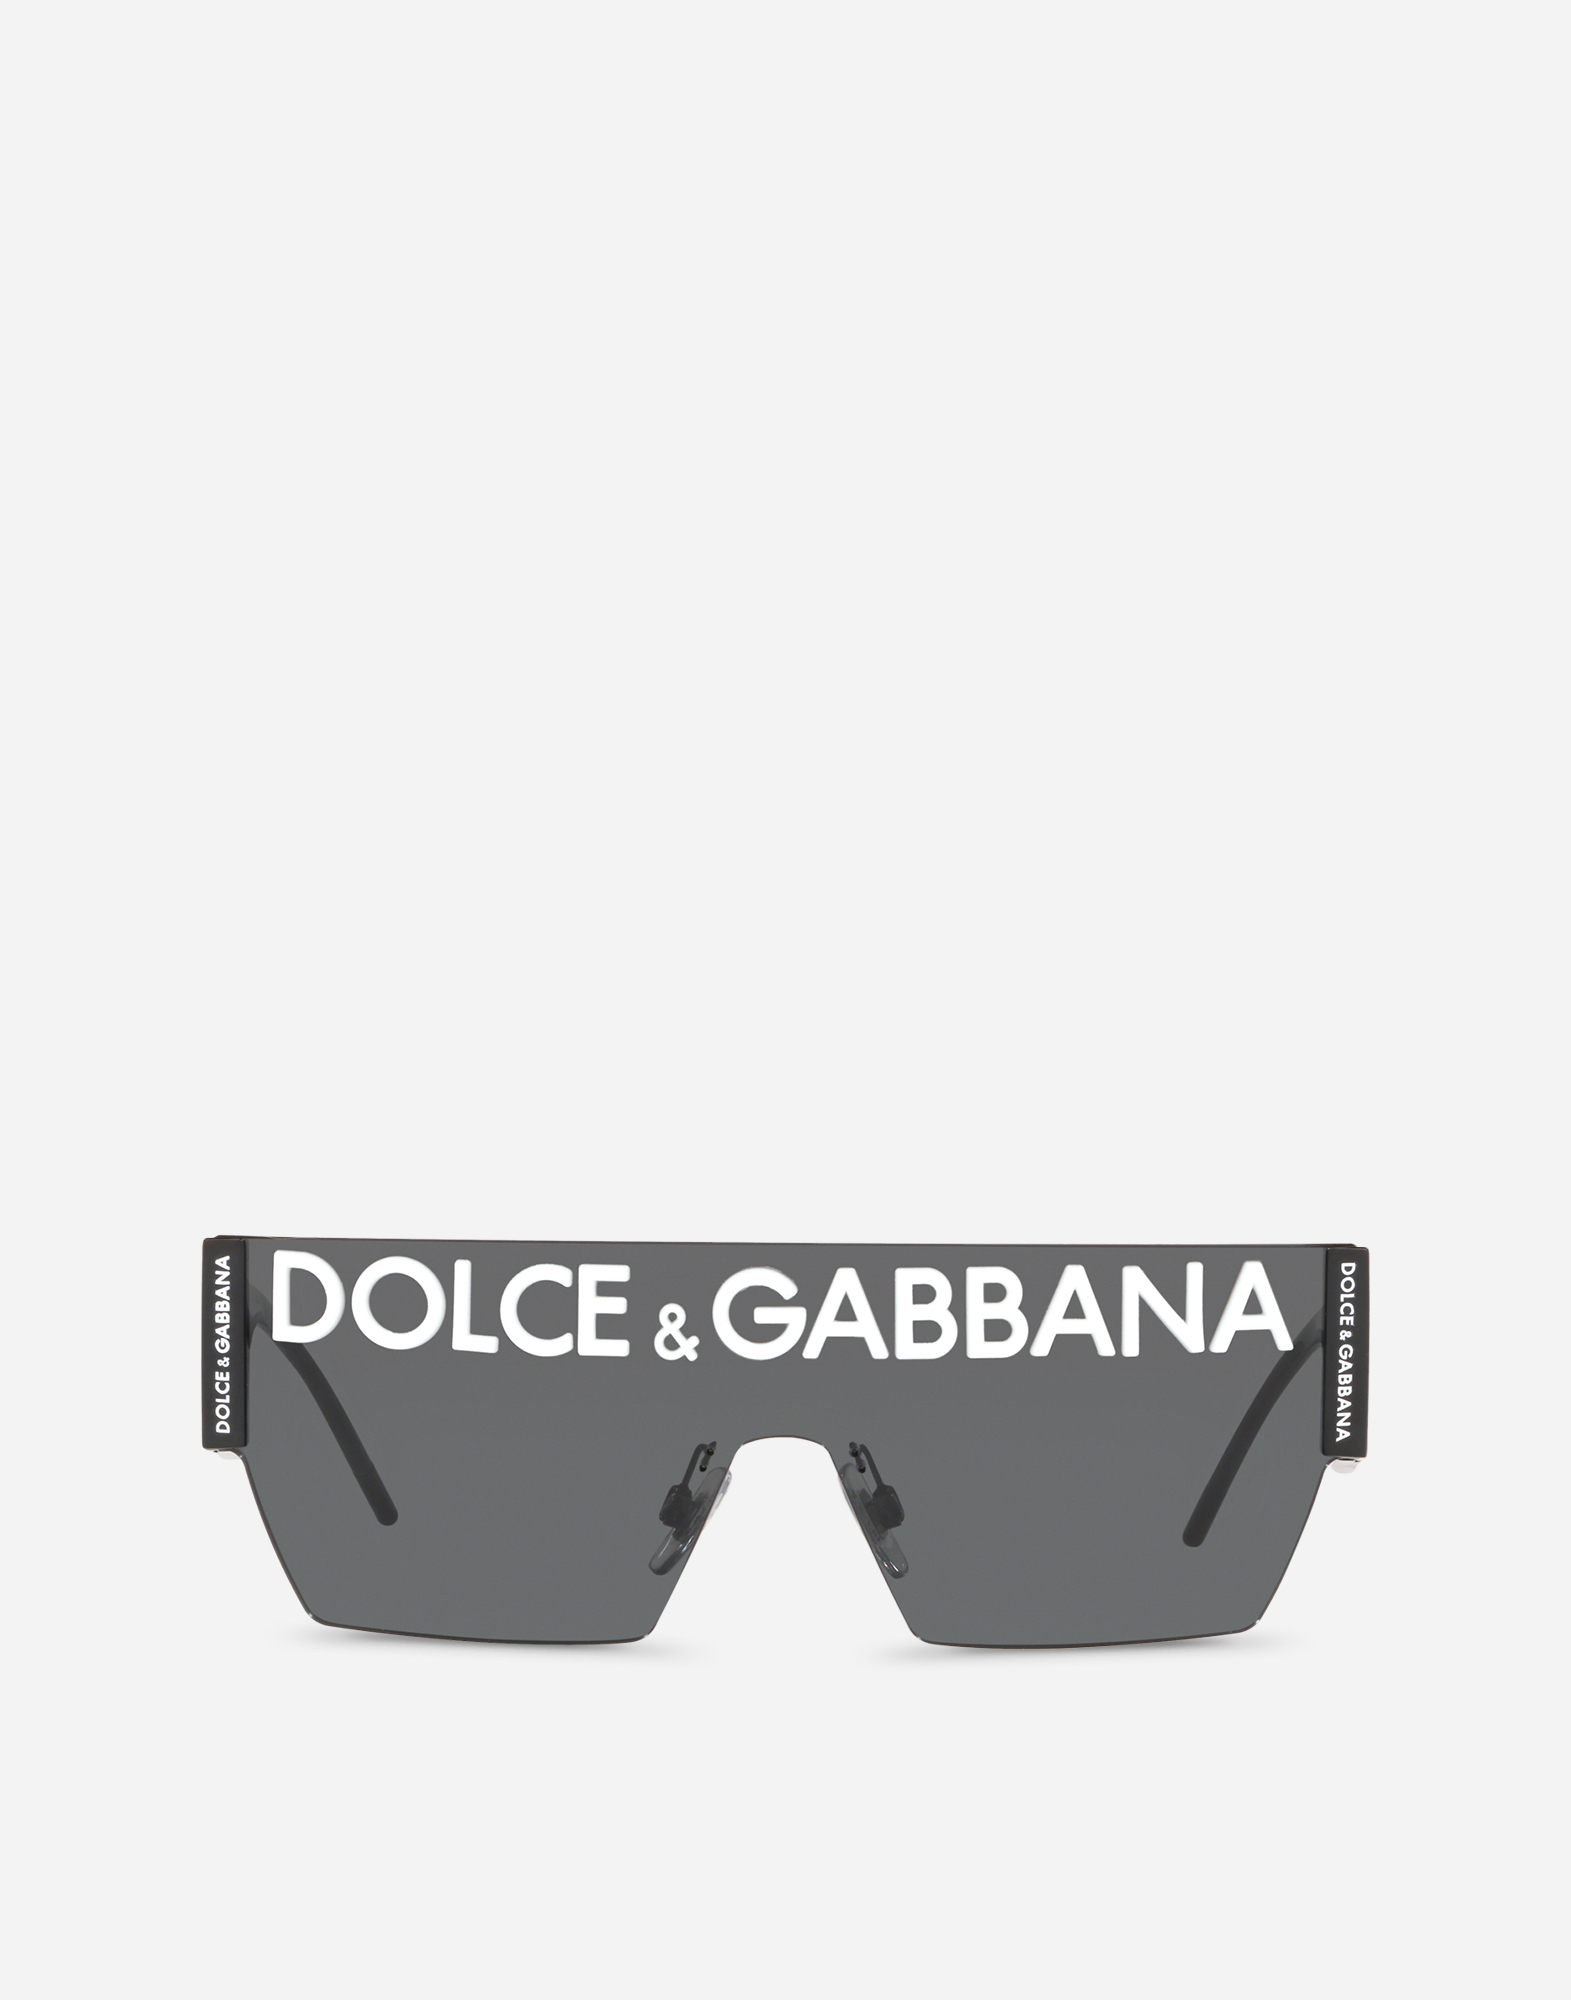 dolce and gabbana green sunglasses